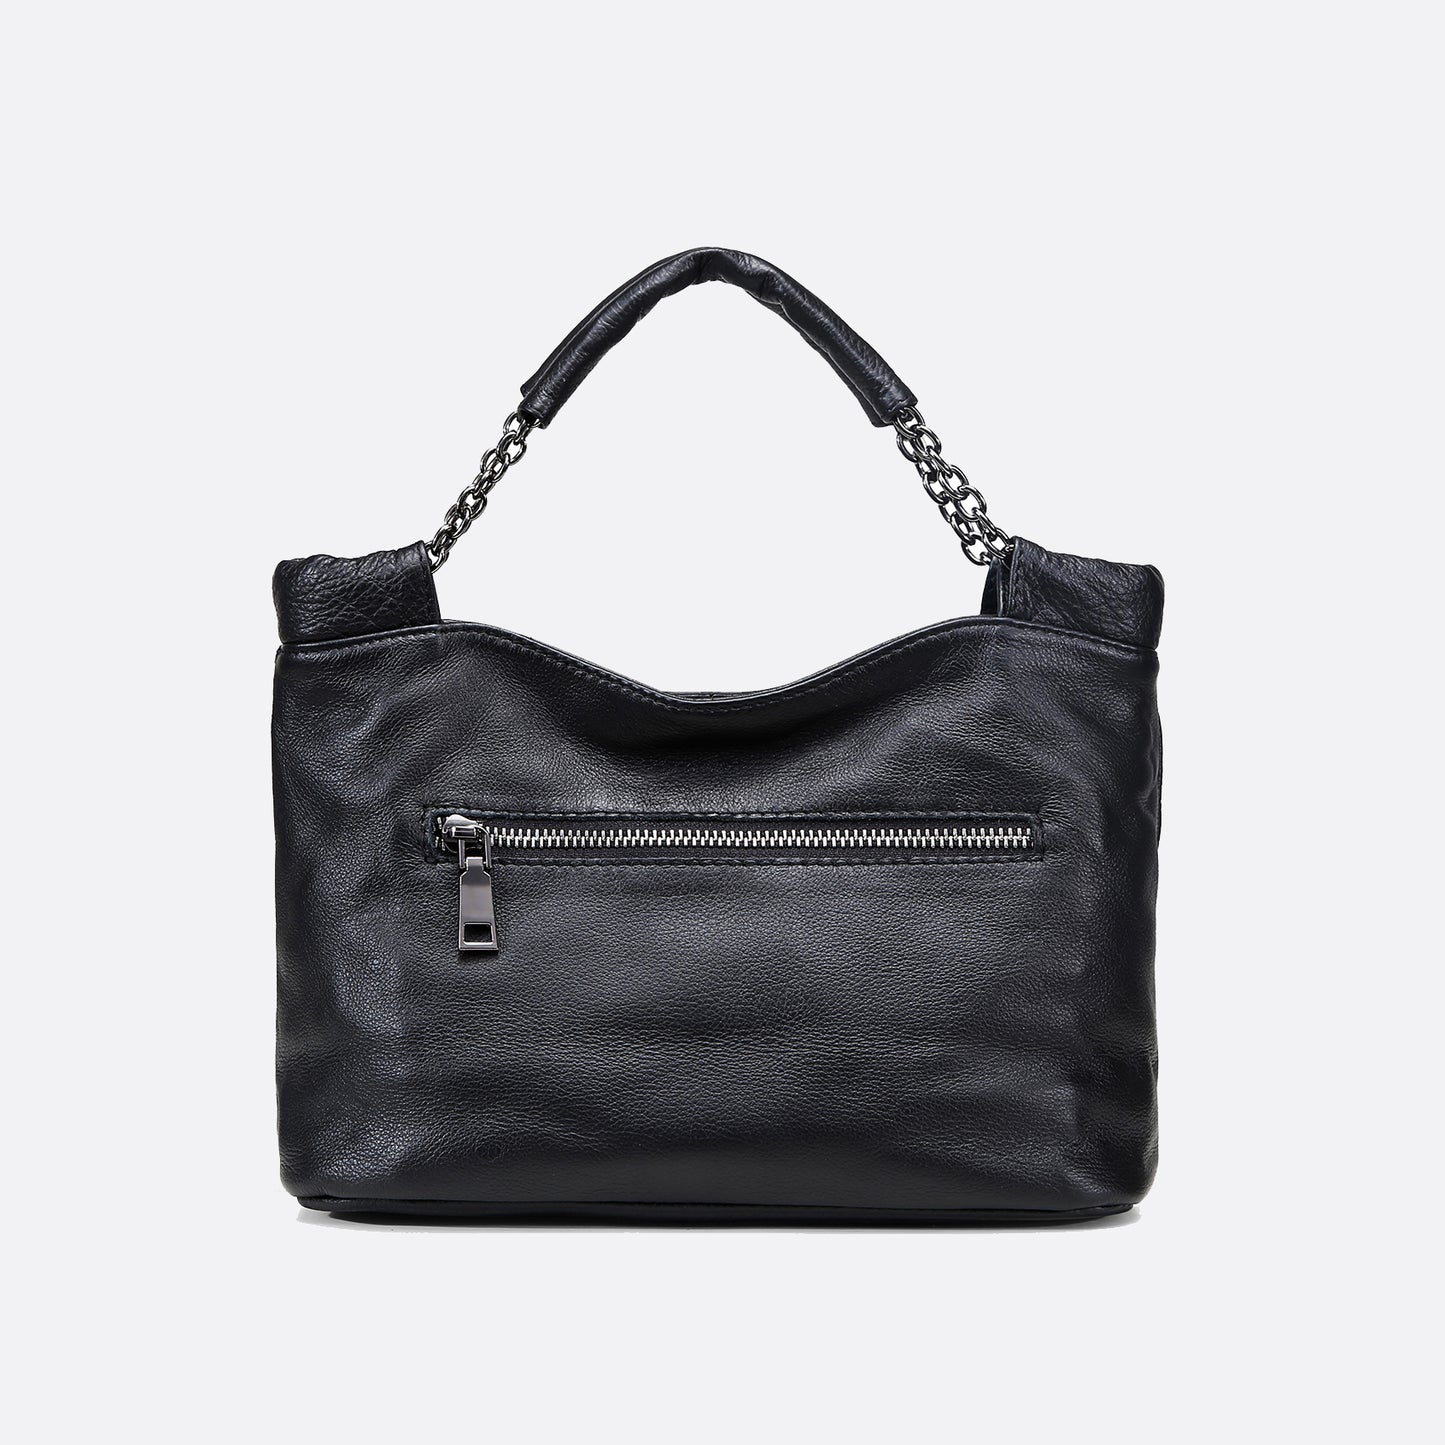 Women's genuine cowhide leather handbag Carly chain design